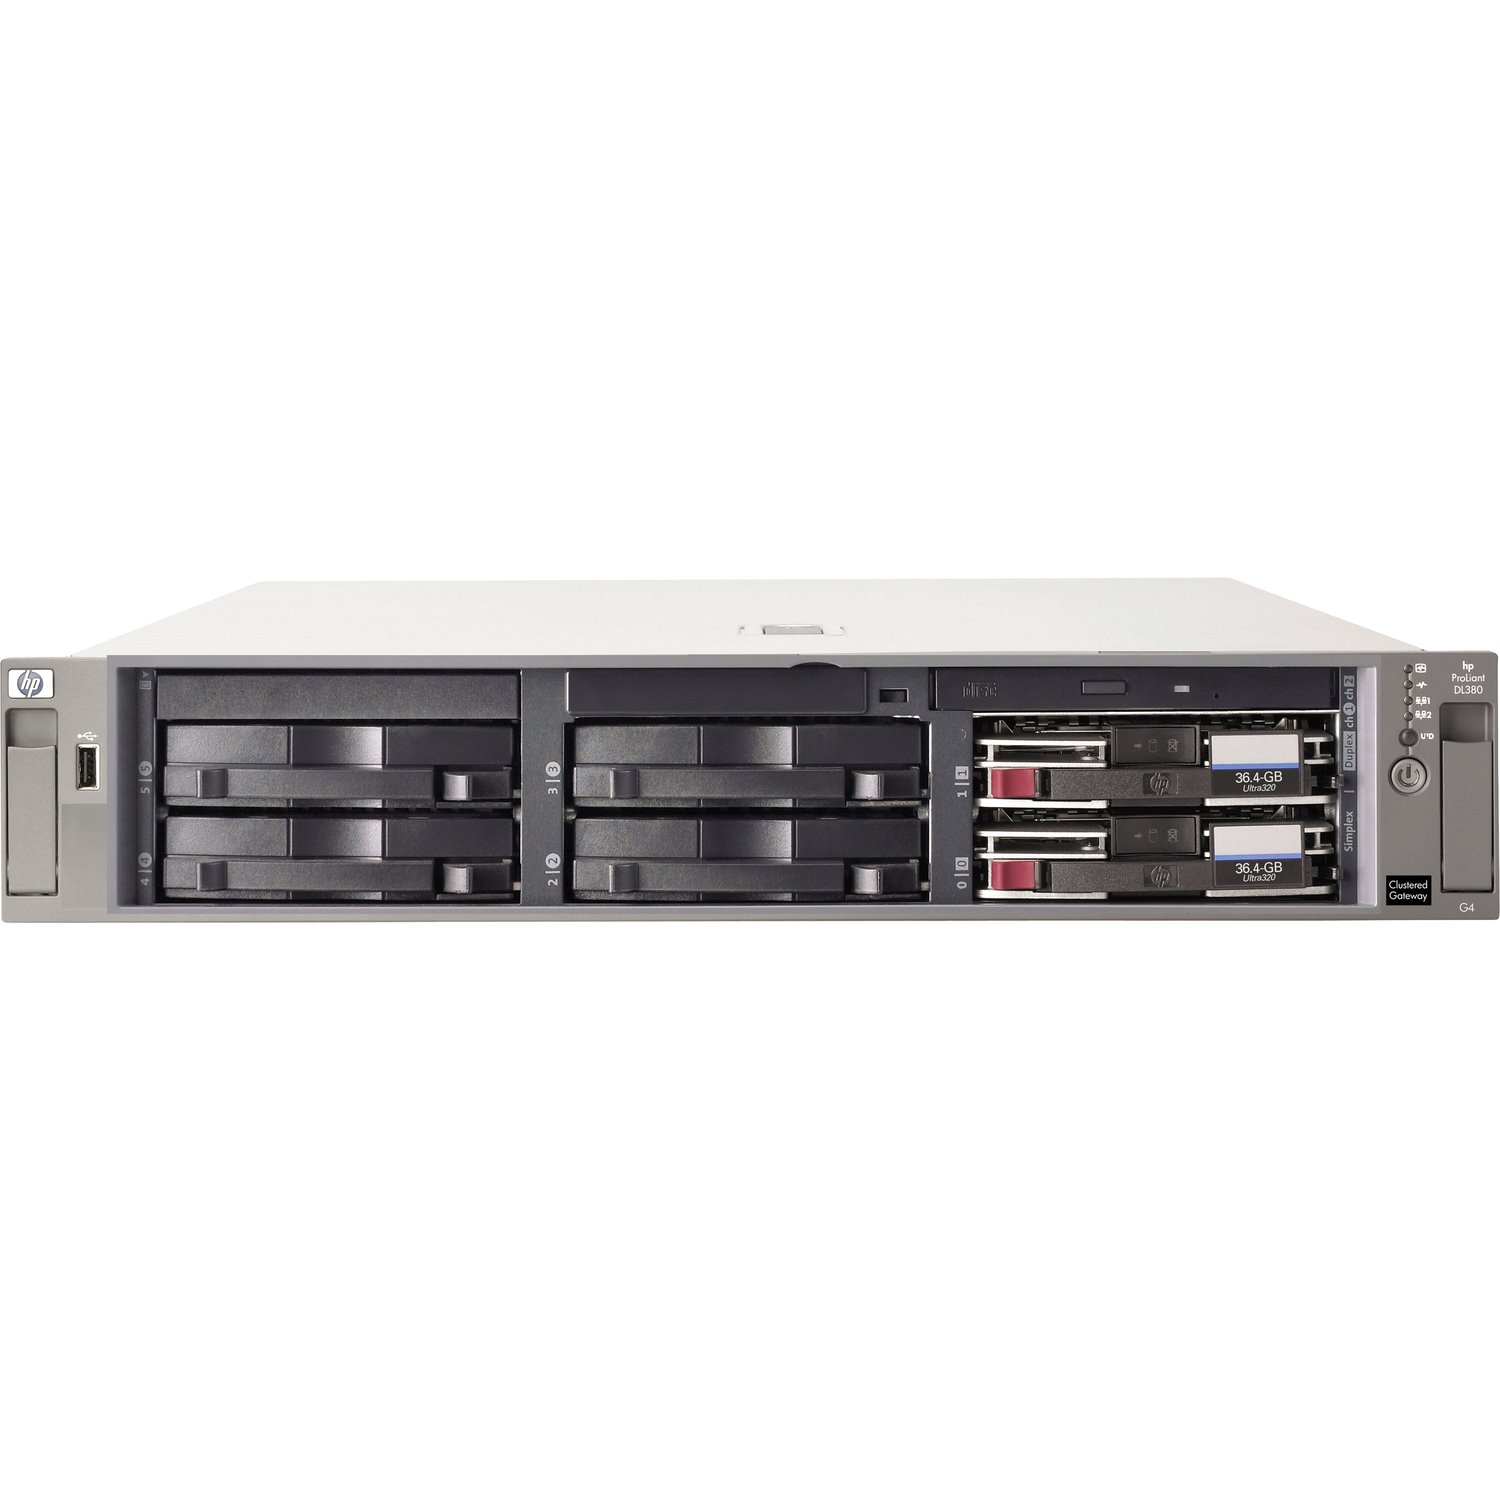 HPE ProLiant DL380 G4 2U Rack Server - 1 x Intel Xeon 3 GHz - 2 GB RAM - Ultra320 SCSI, Ultra ATA Controller